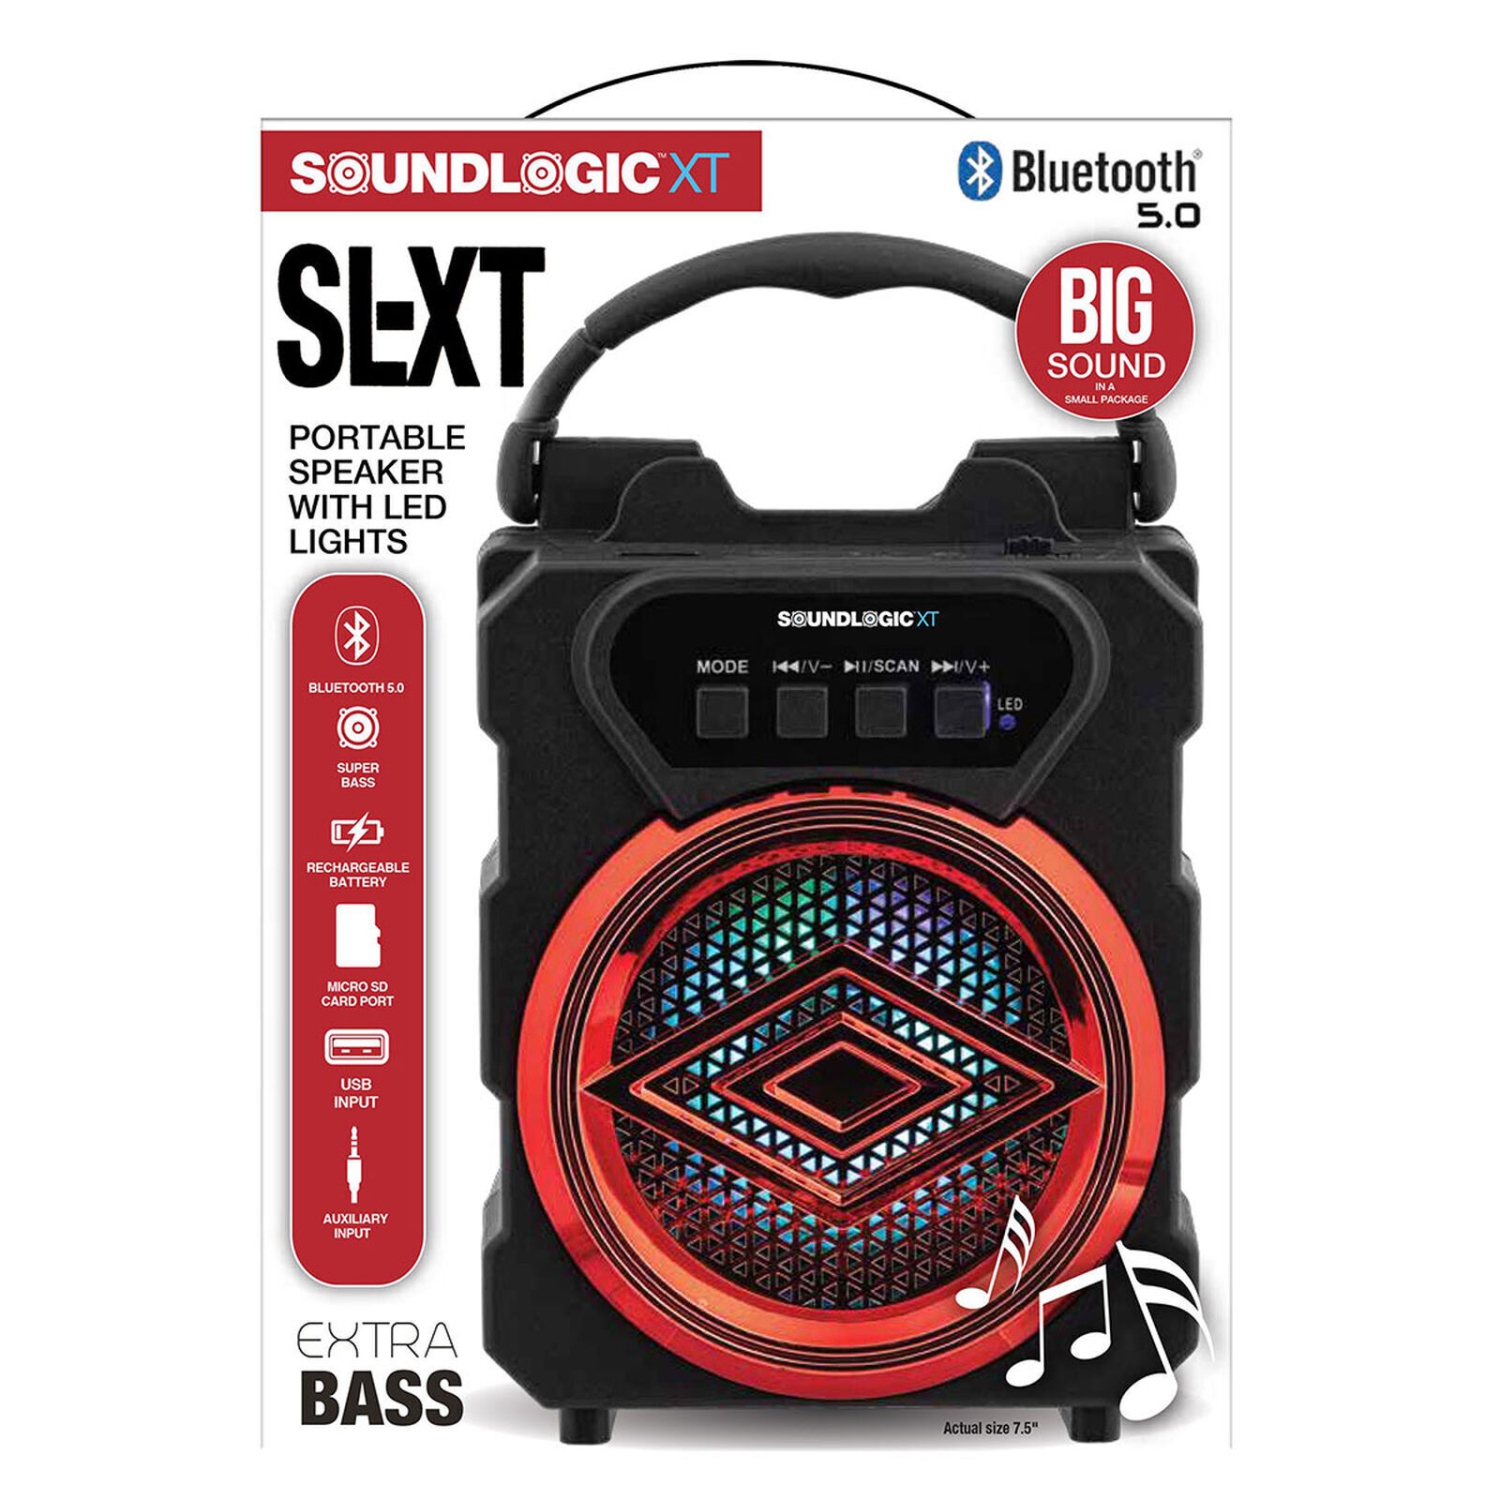 Soundlogic XT SL-XT Mini Portable Bluetooth Speaker with LED